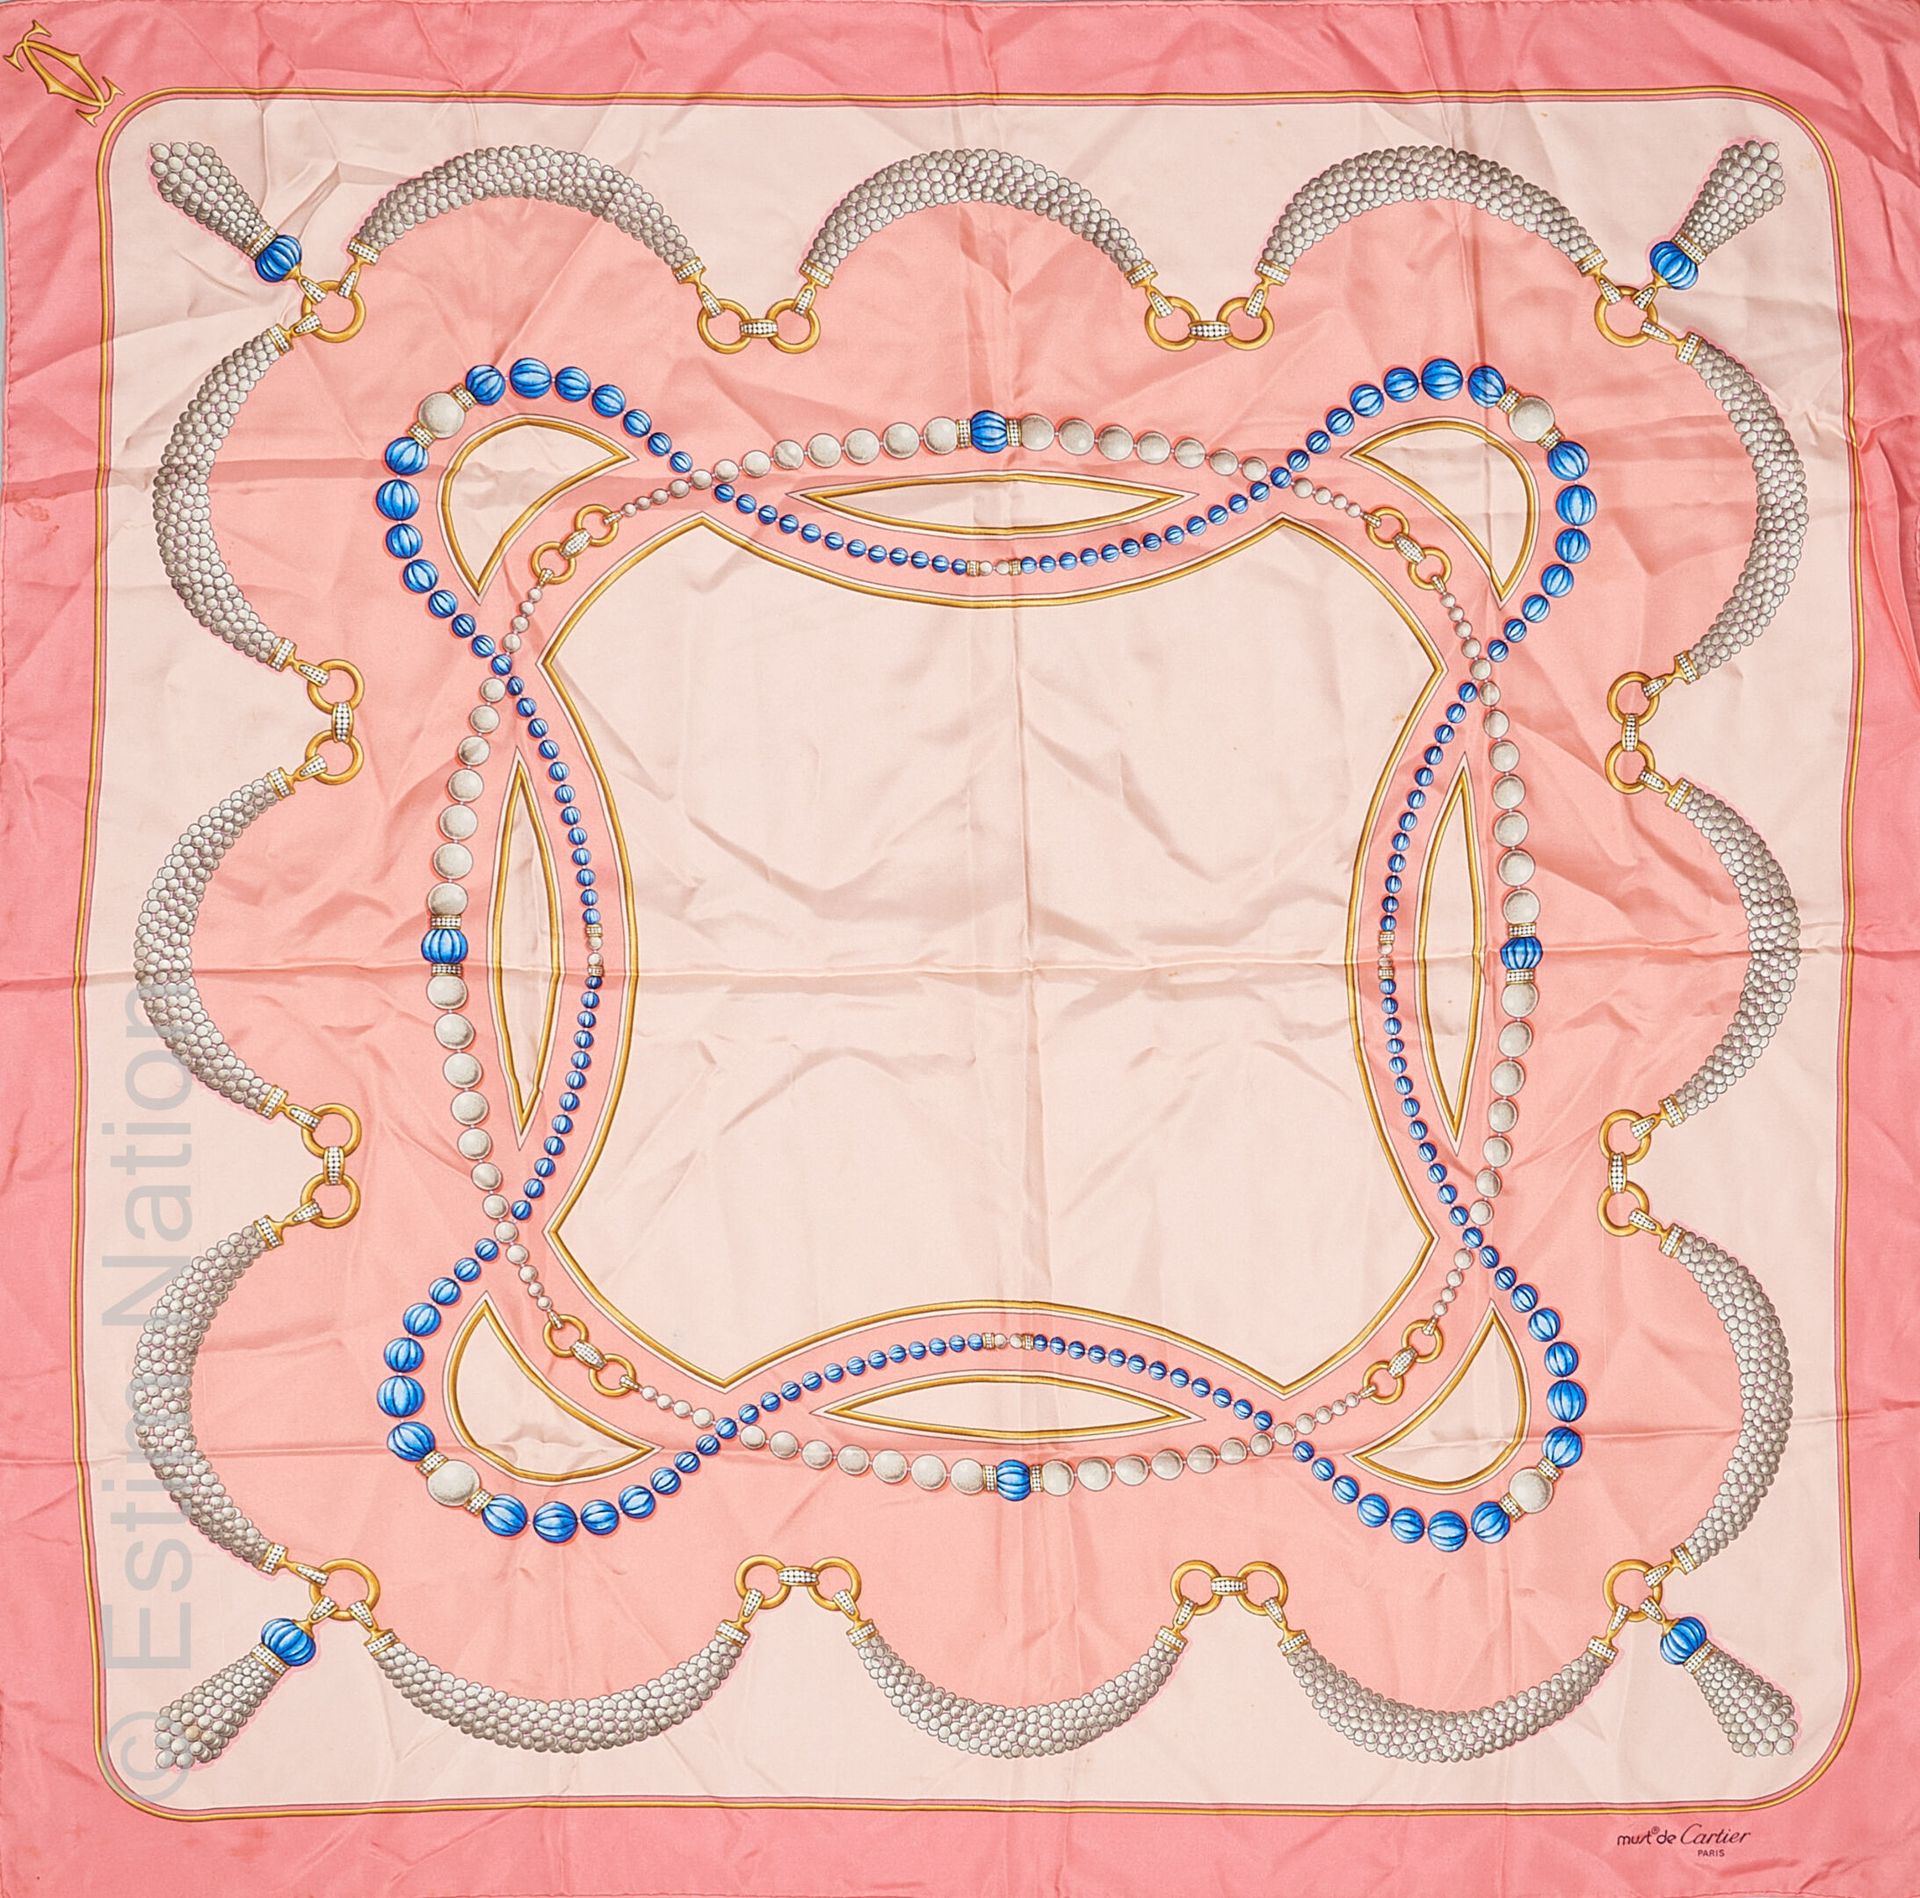 MUST DE CARTIER 粉红色背景上有珠宝图案的丝绸斜纹方格（有些污渍）。